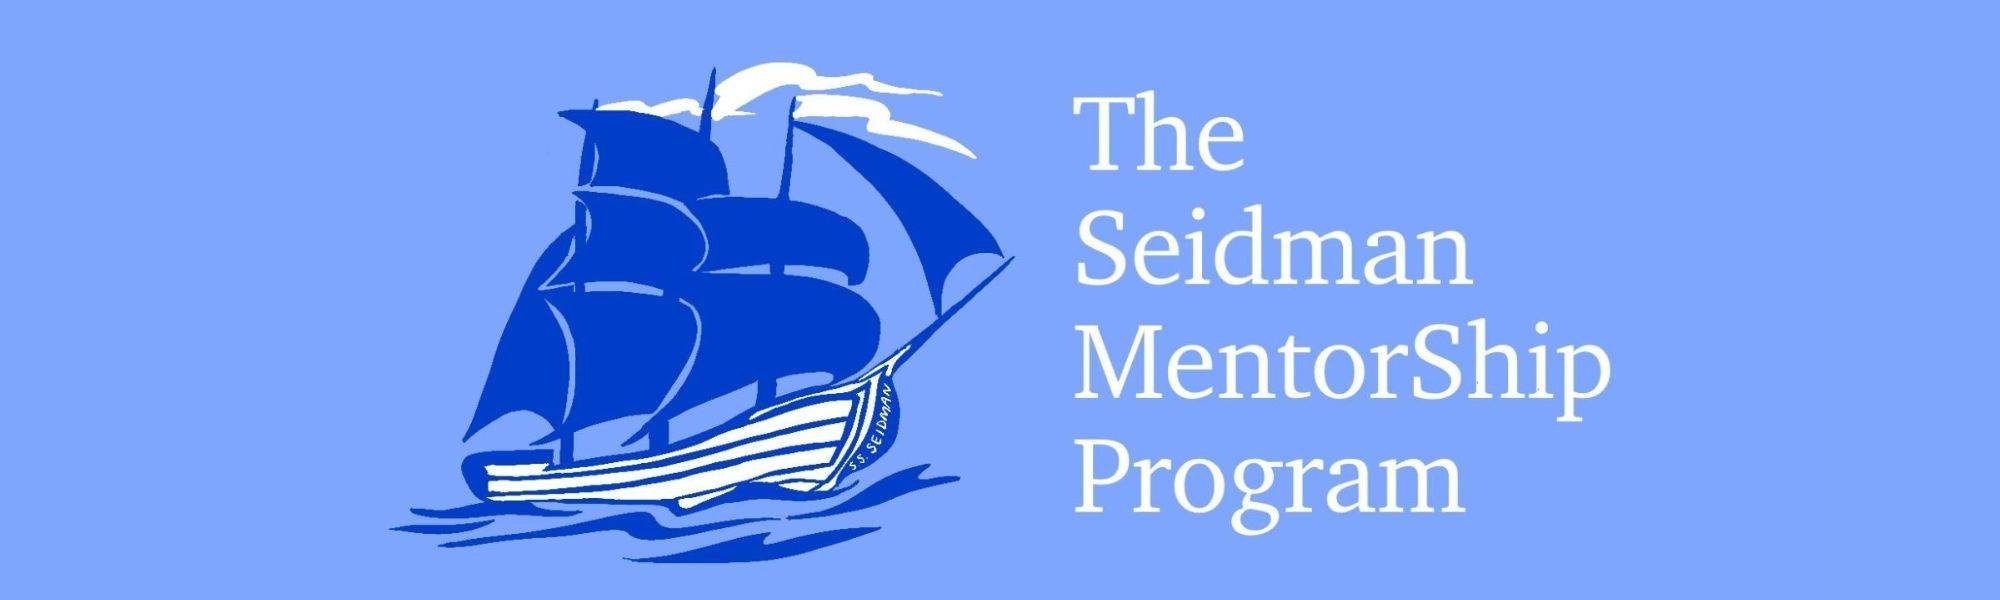 Seidman MentorShip Program logo